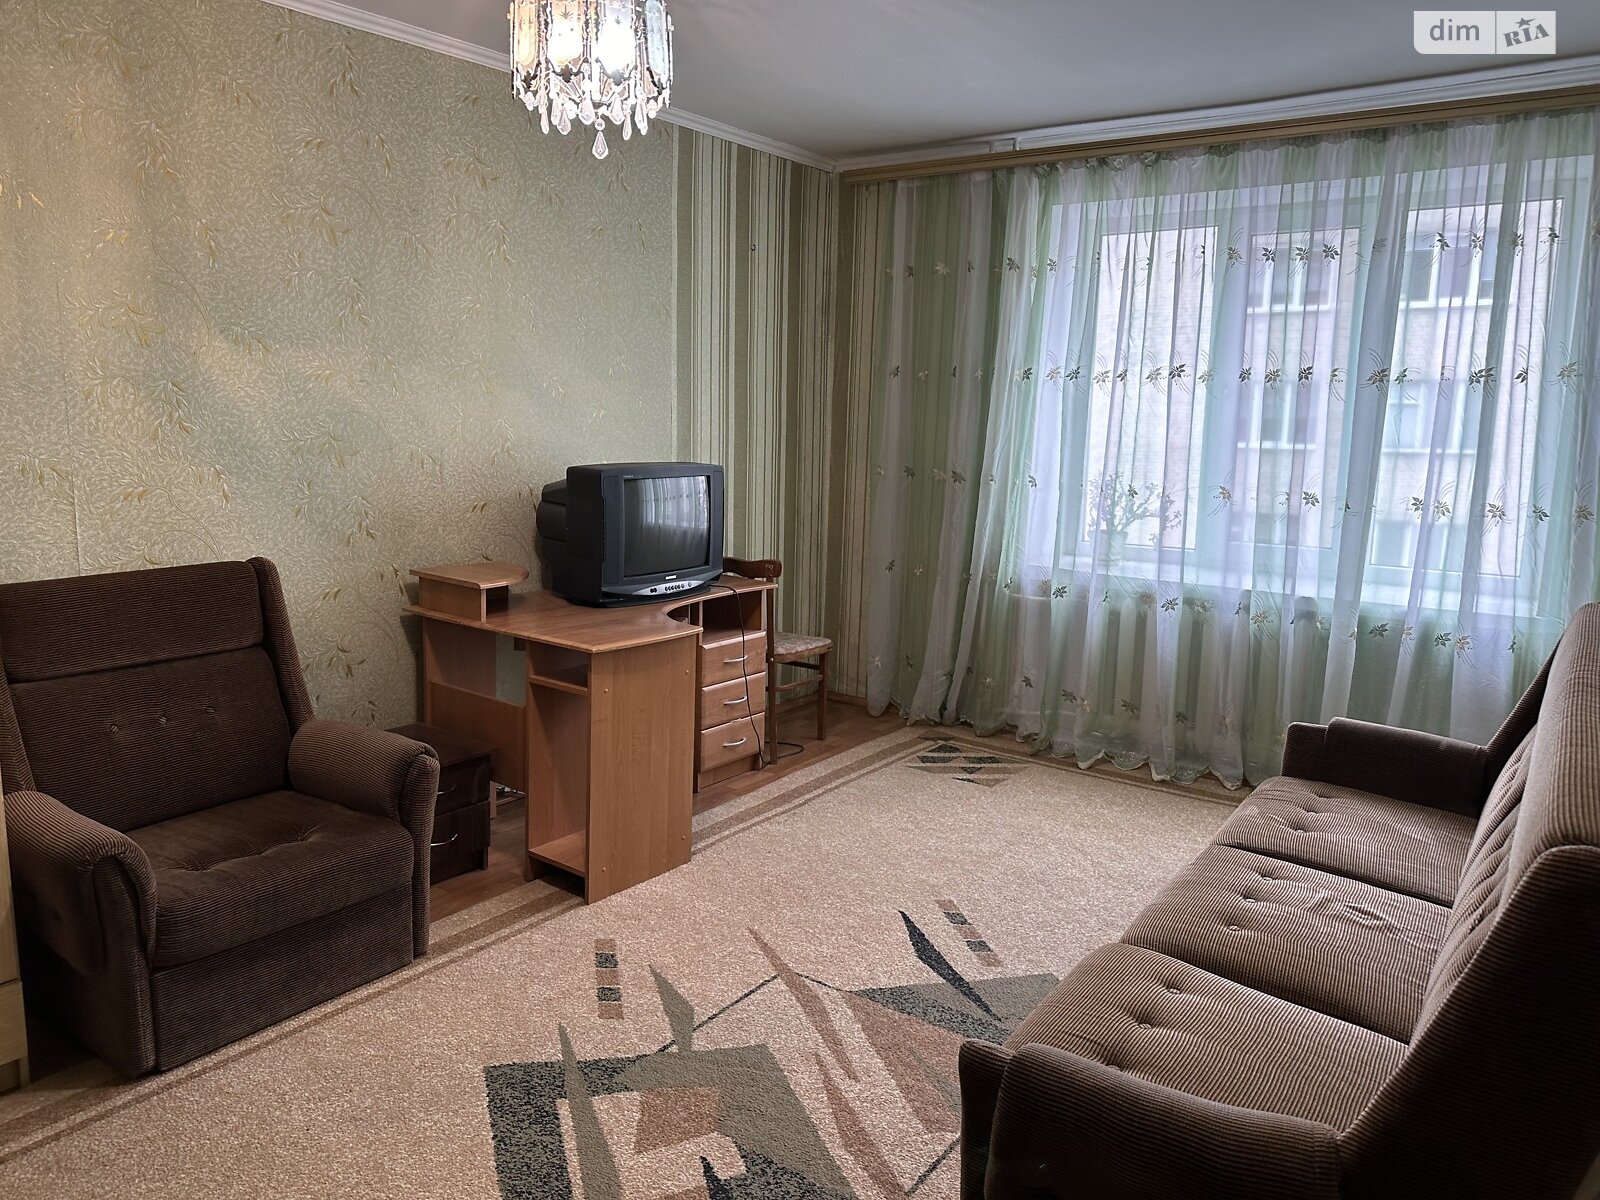 Продажа двухкомнатной квартиры в Ровно, на ул. Фабричная 4А, район Ленокомбинат фото 1